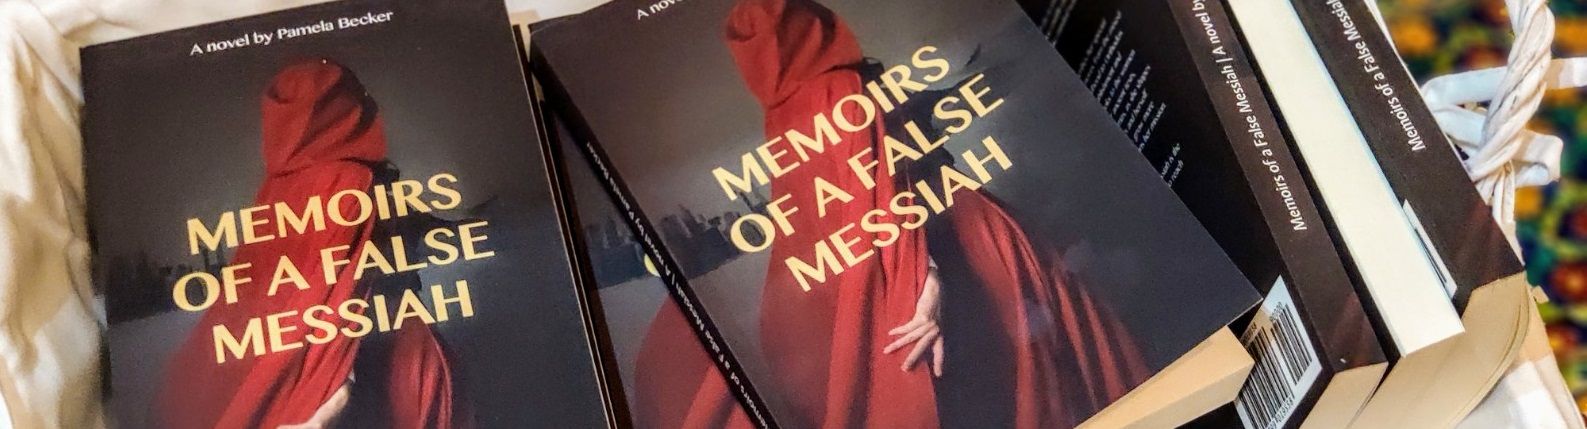 Memoirs of a False Messiah Book Launch